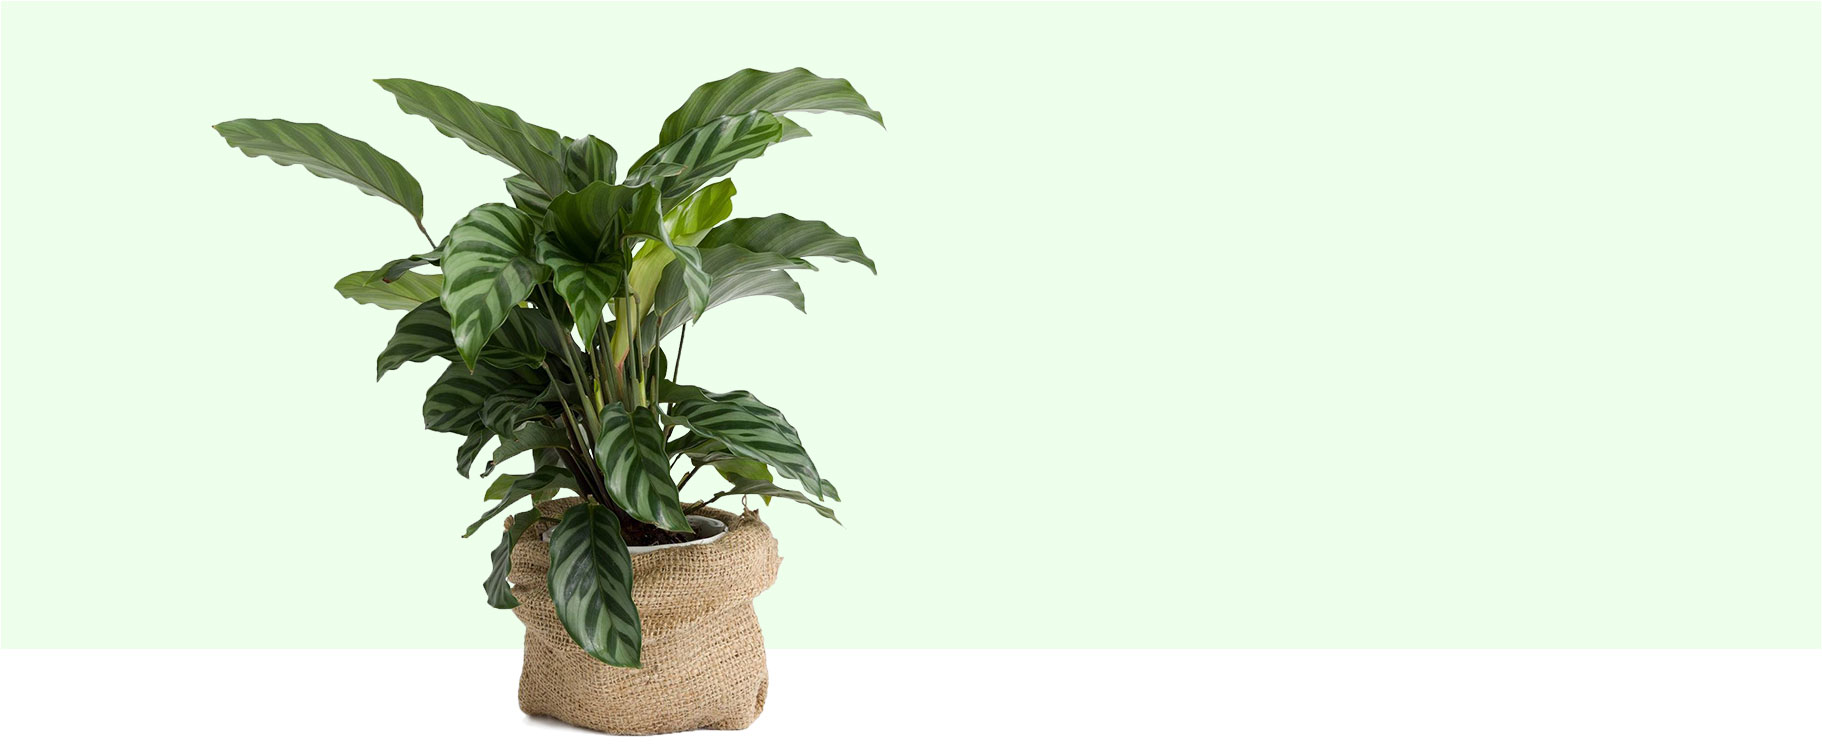 Plant – Gardening & Houseplants WordPress Theme